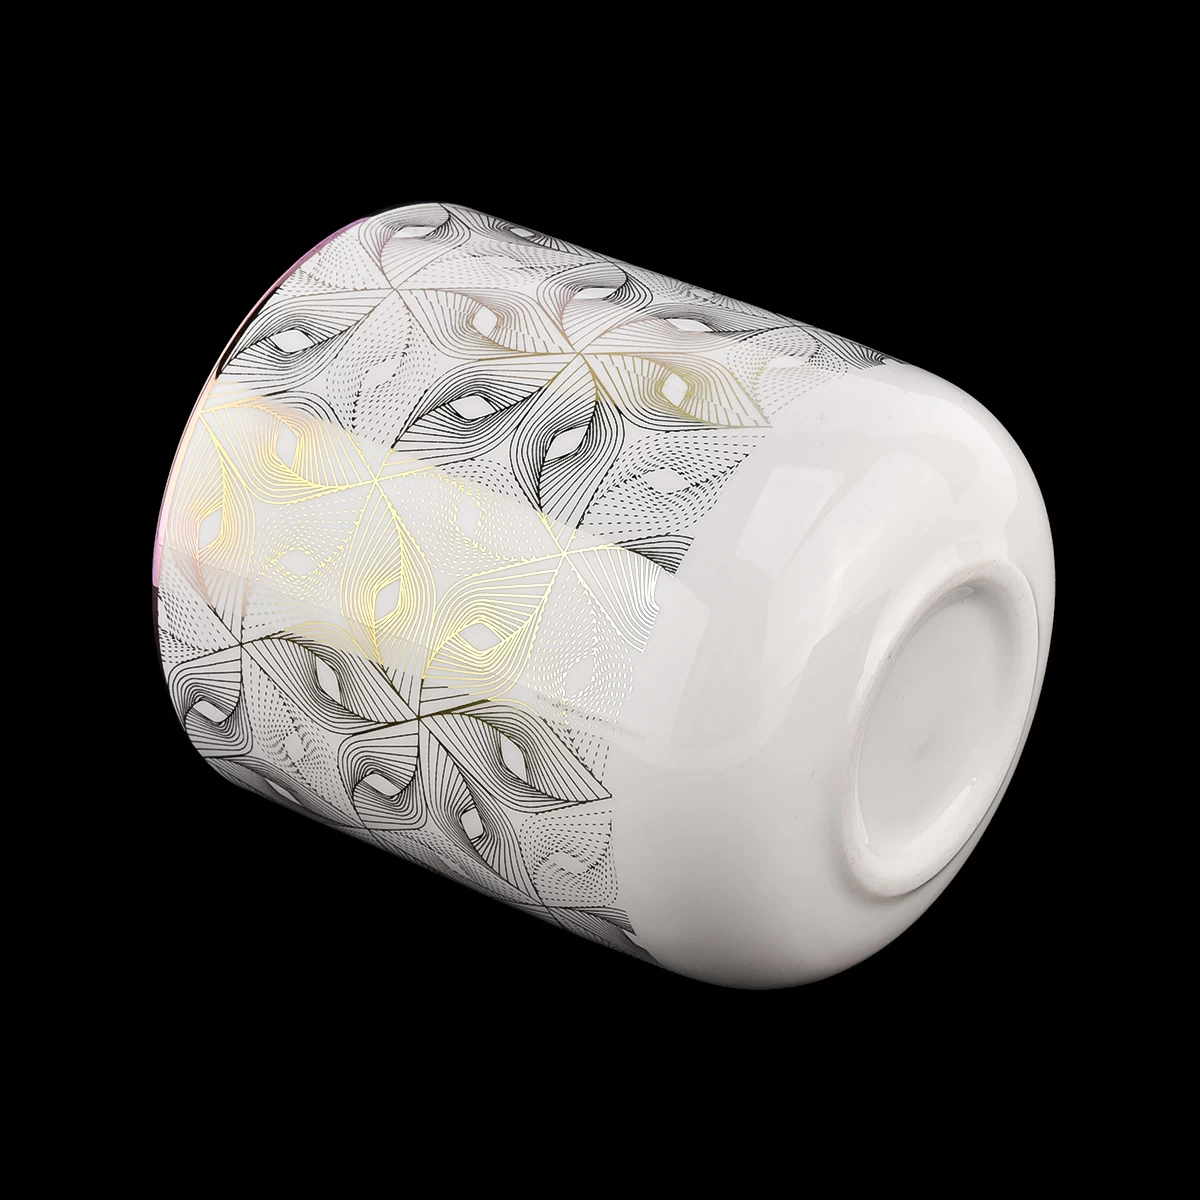 luxury round white ceramic candle jar